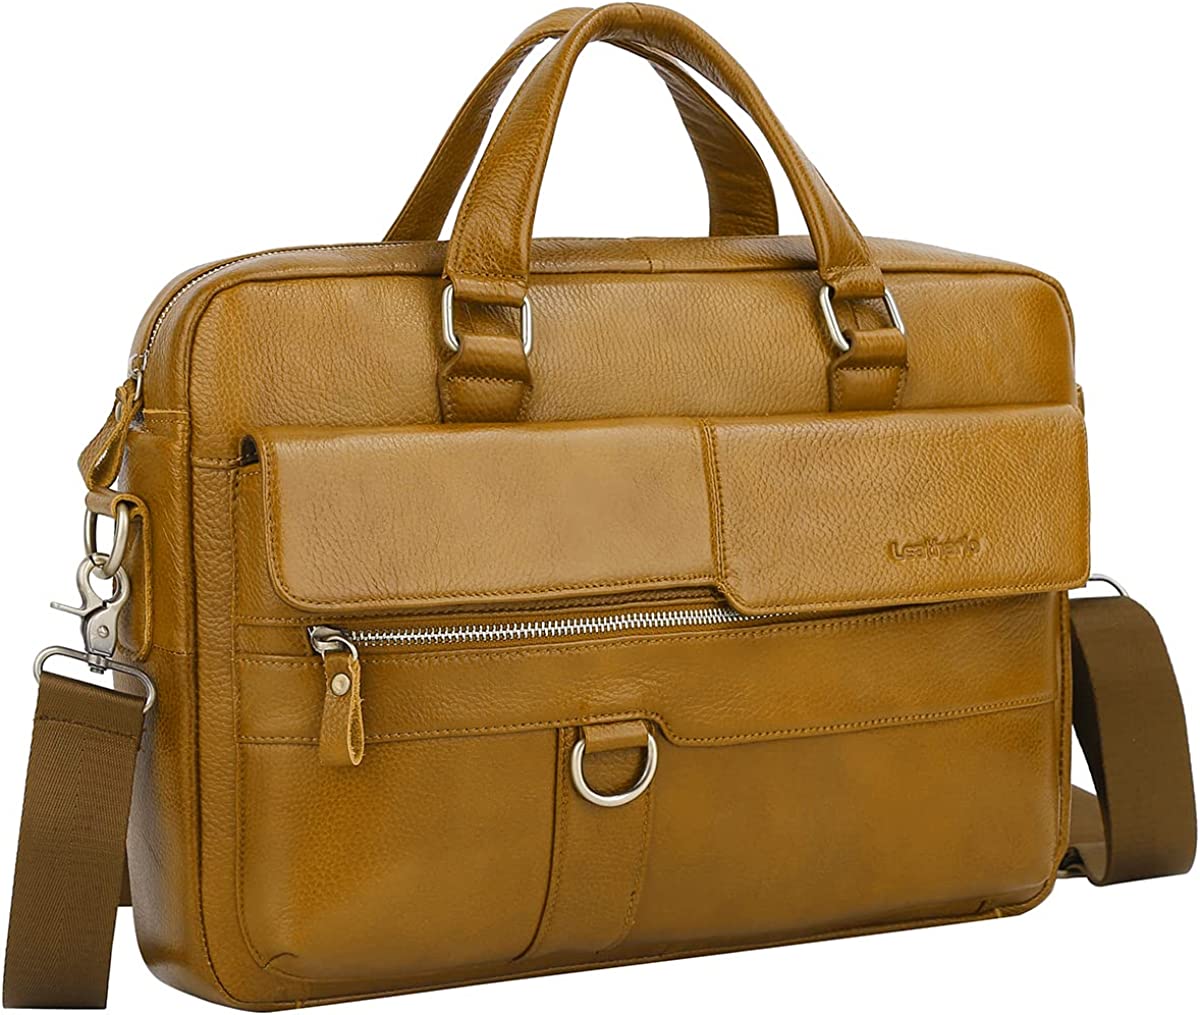 Men’s Leather Briefcase And Handbag Supplier